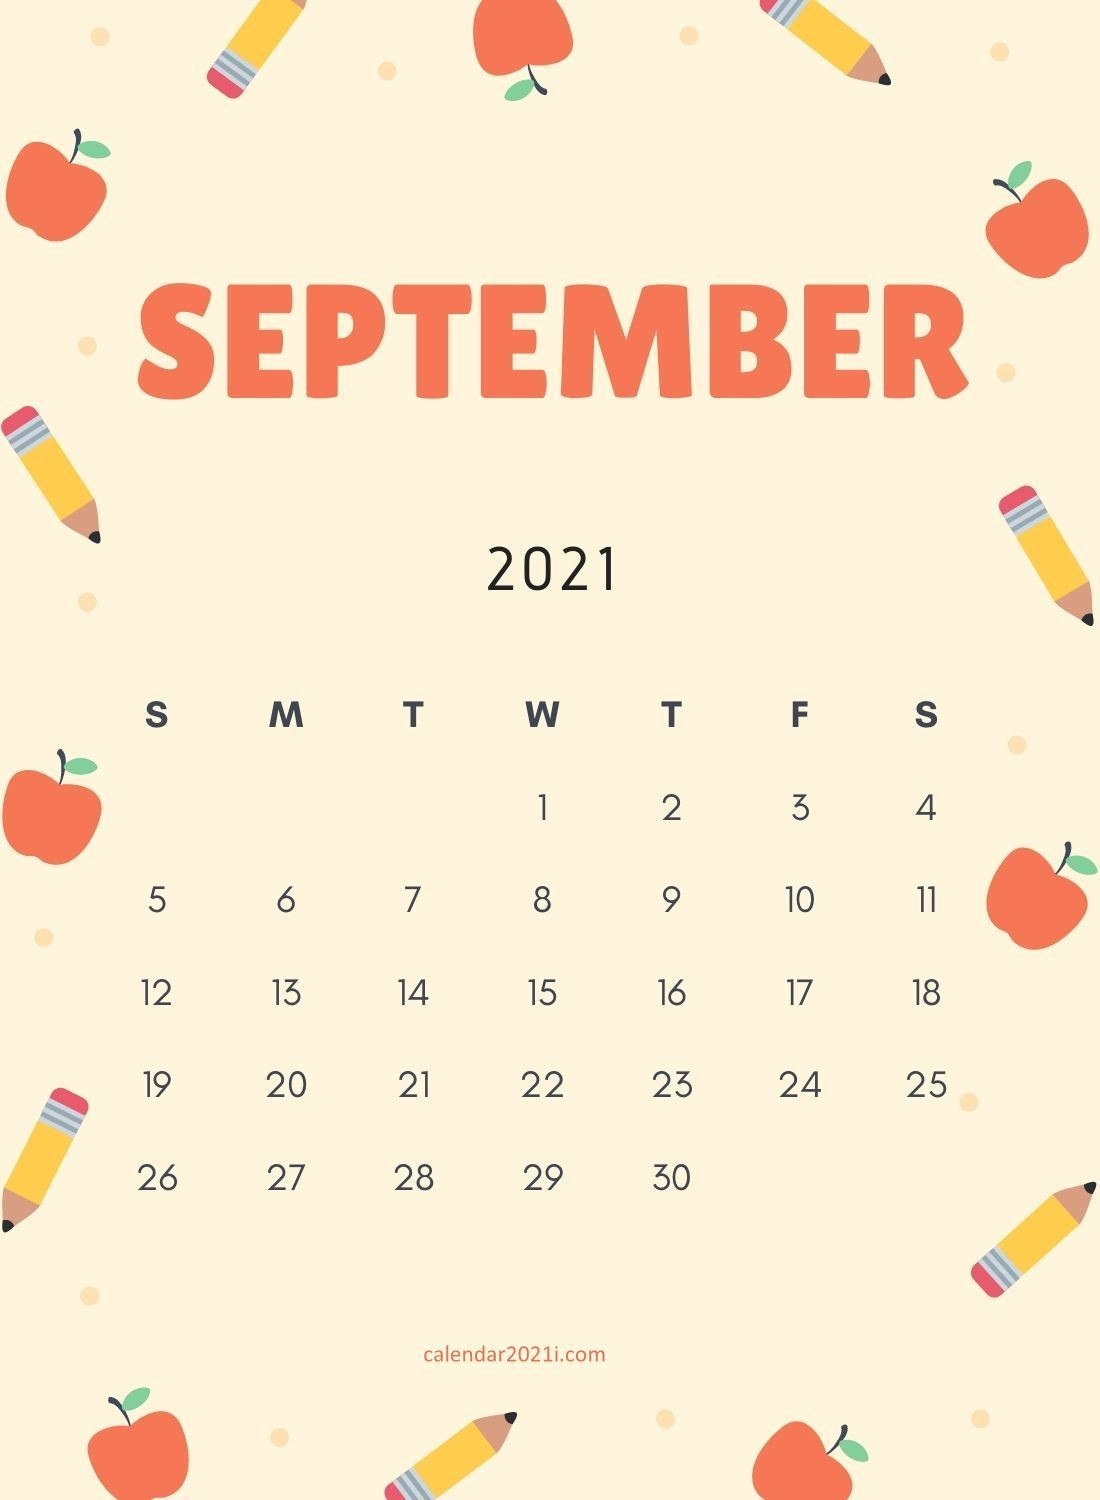 September 2021 Wallpaper Calendar | Academic Calendar-Free Printable Calendar 2021 September